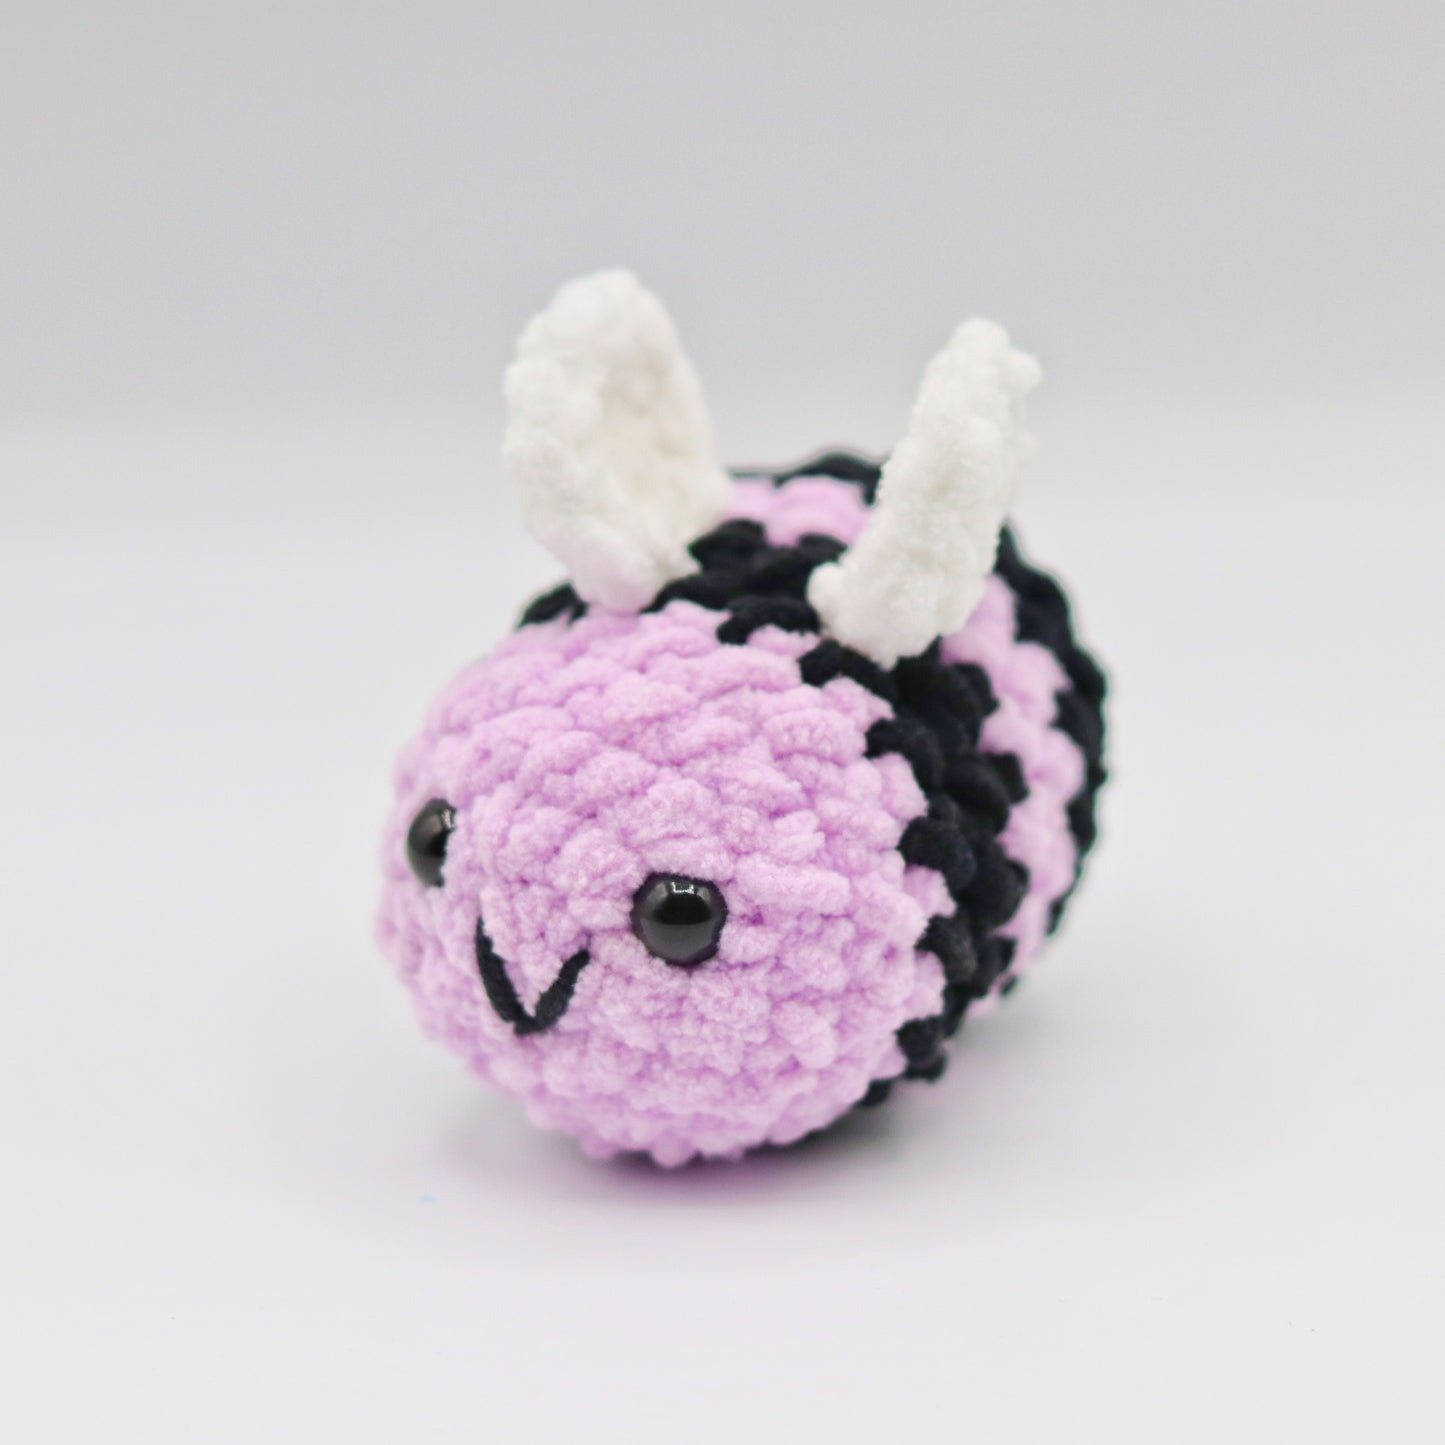 Handmade crochet plush bee toy